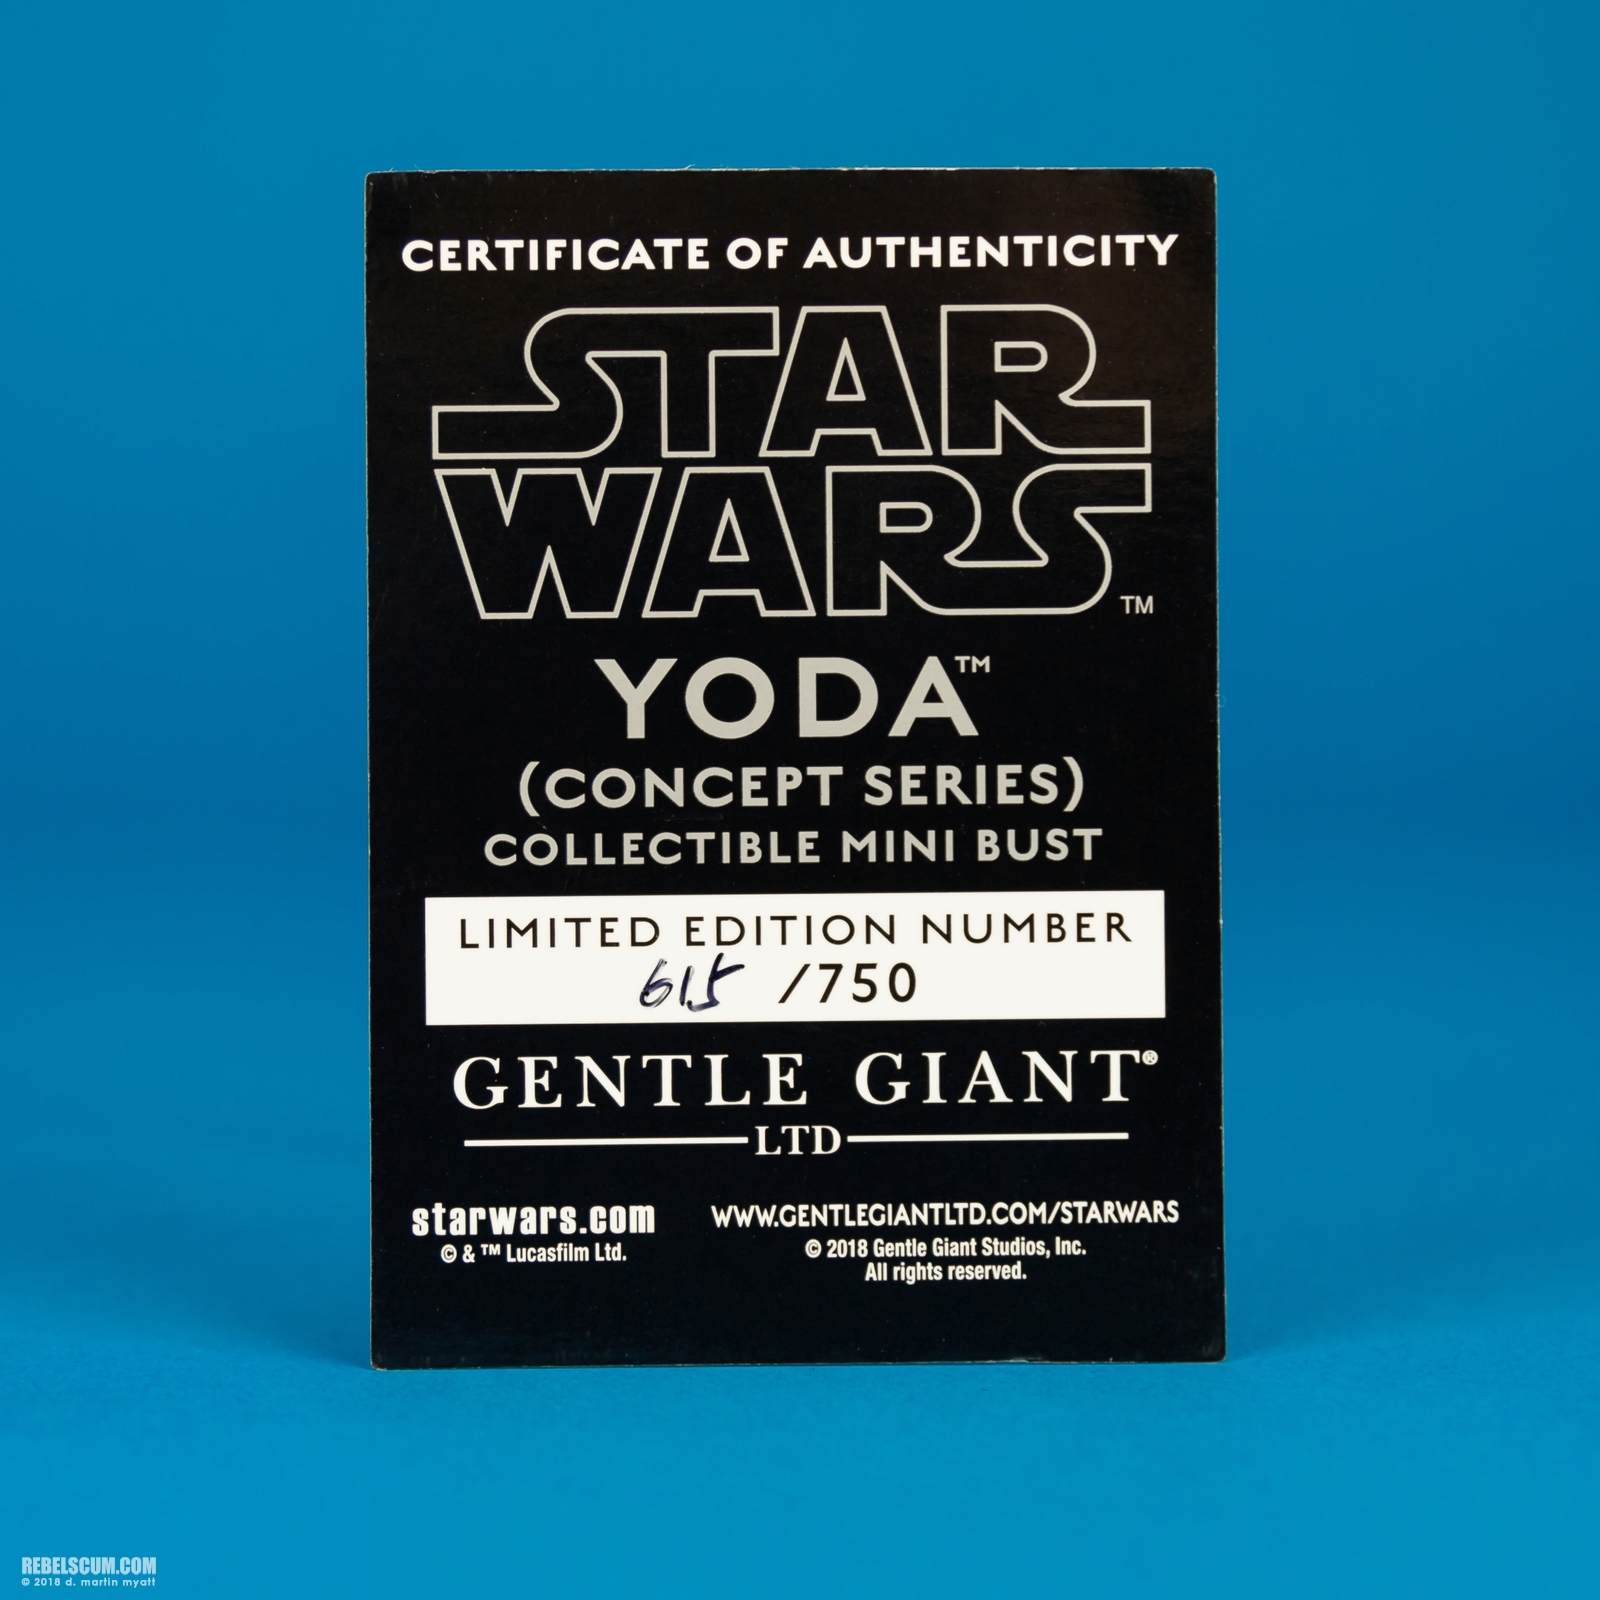 Yoda-Concept-Series-Mini-Bust-Gentle-Giant-Star-Wars-007.jpg